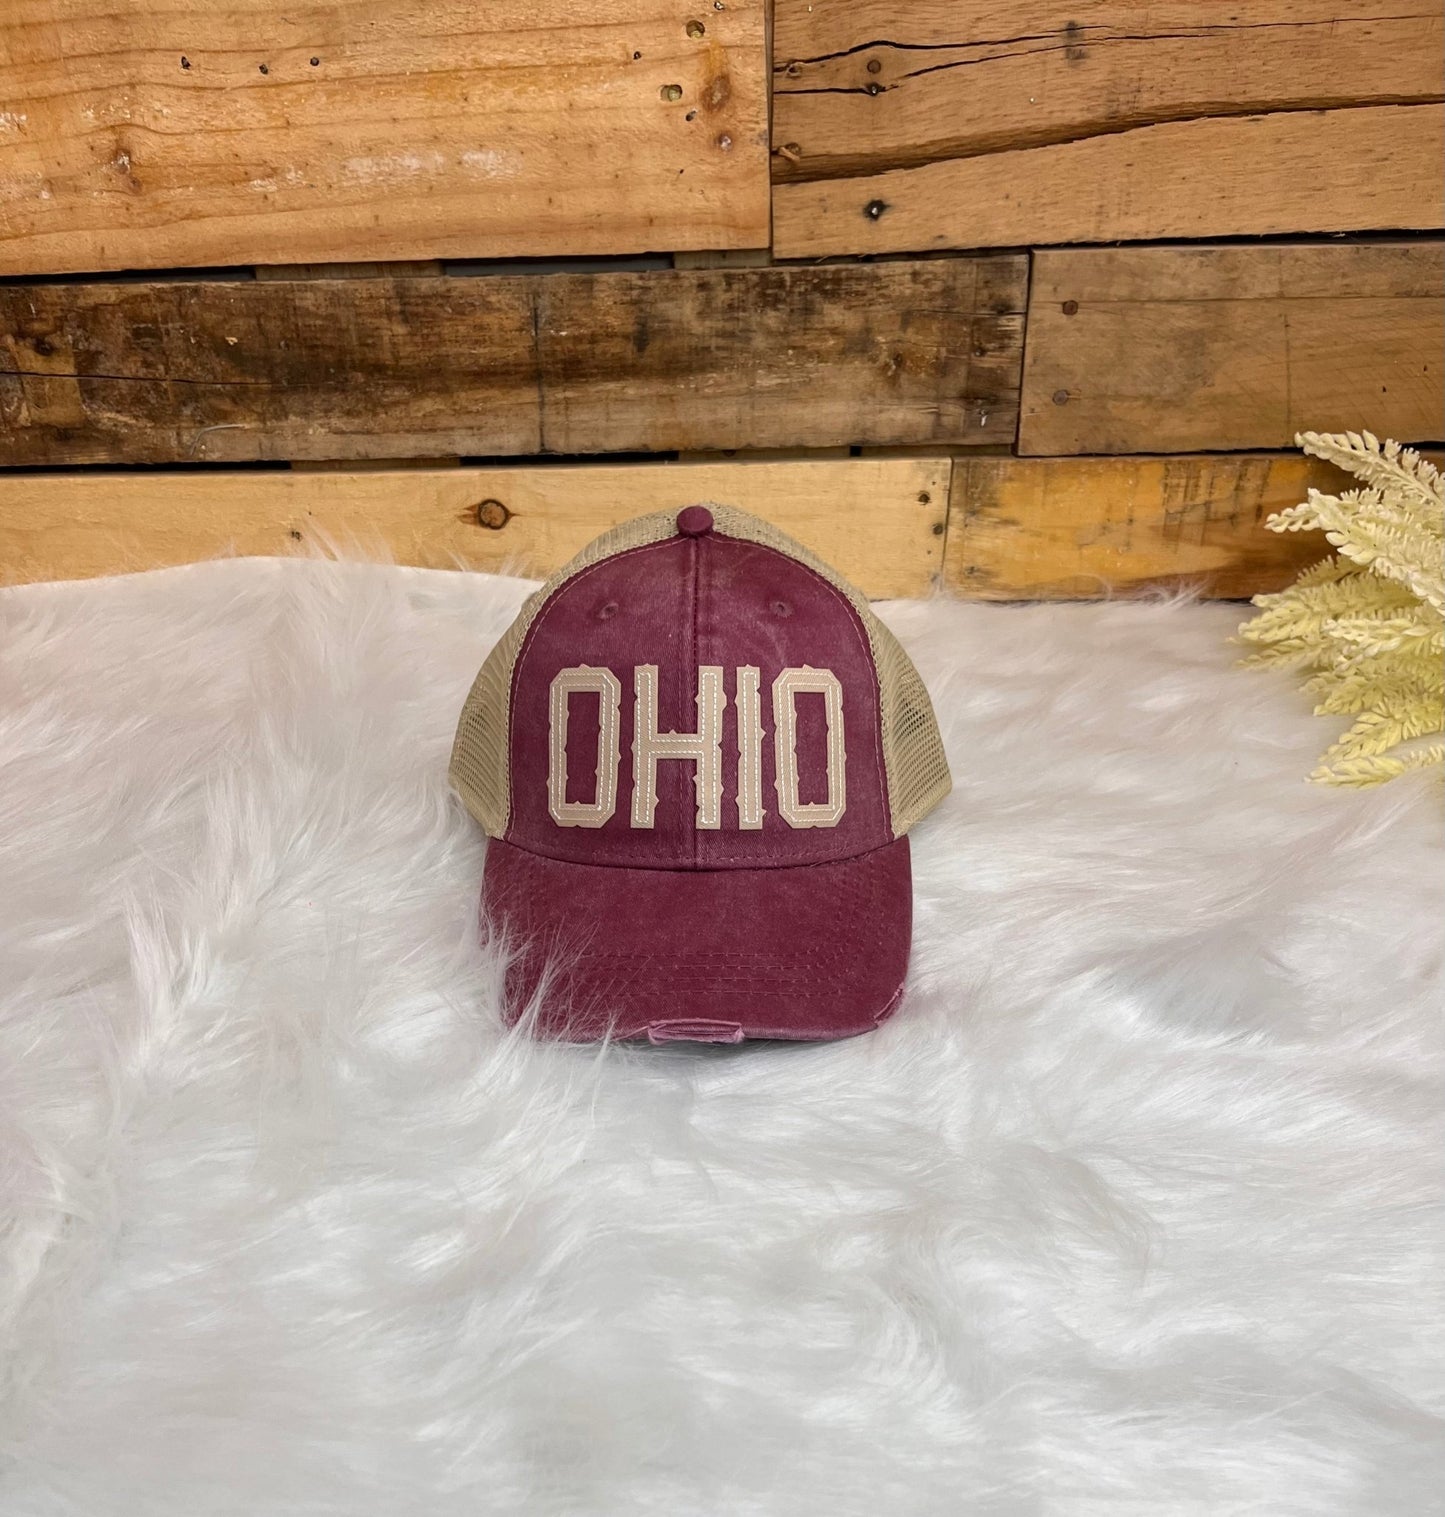 OHIO Trucker Hats - Red Fox Boutique